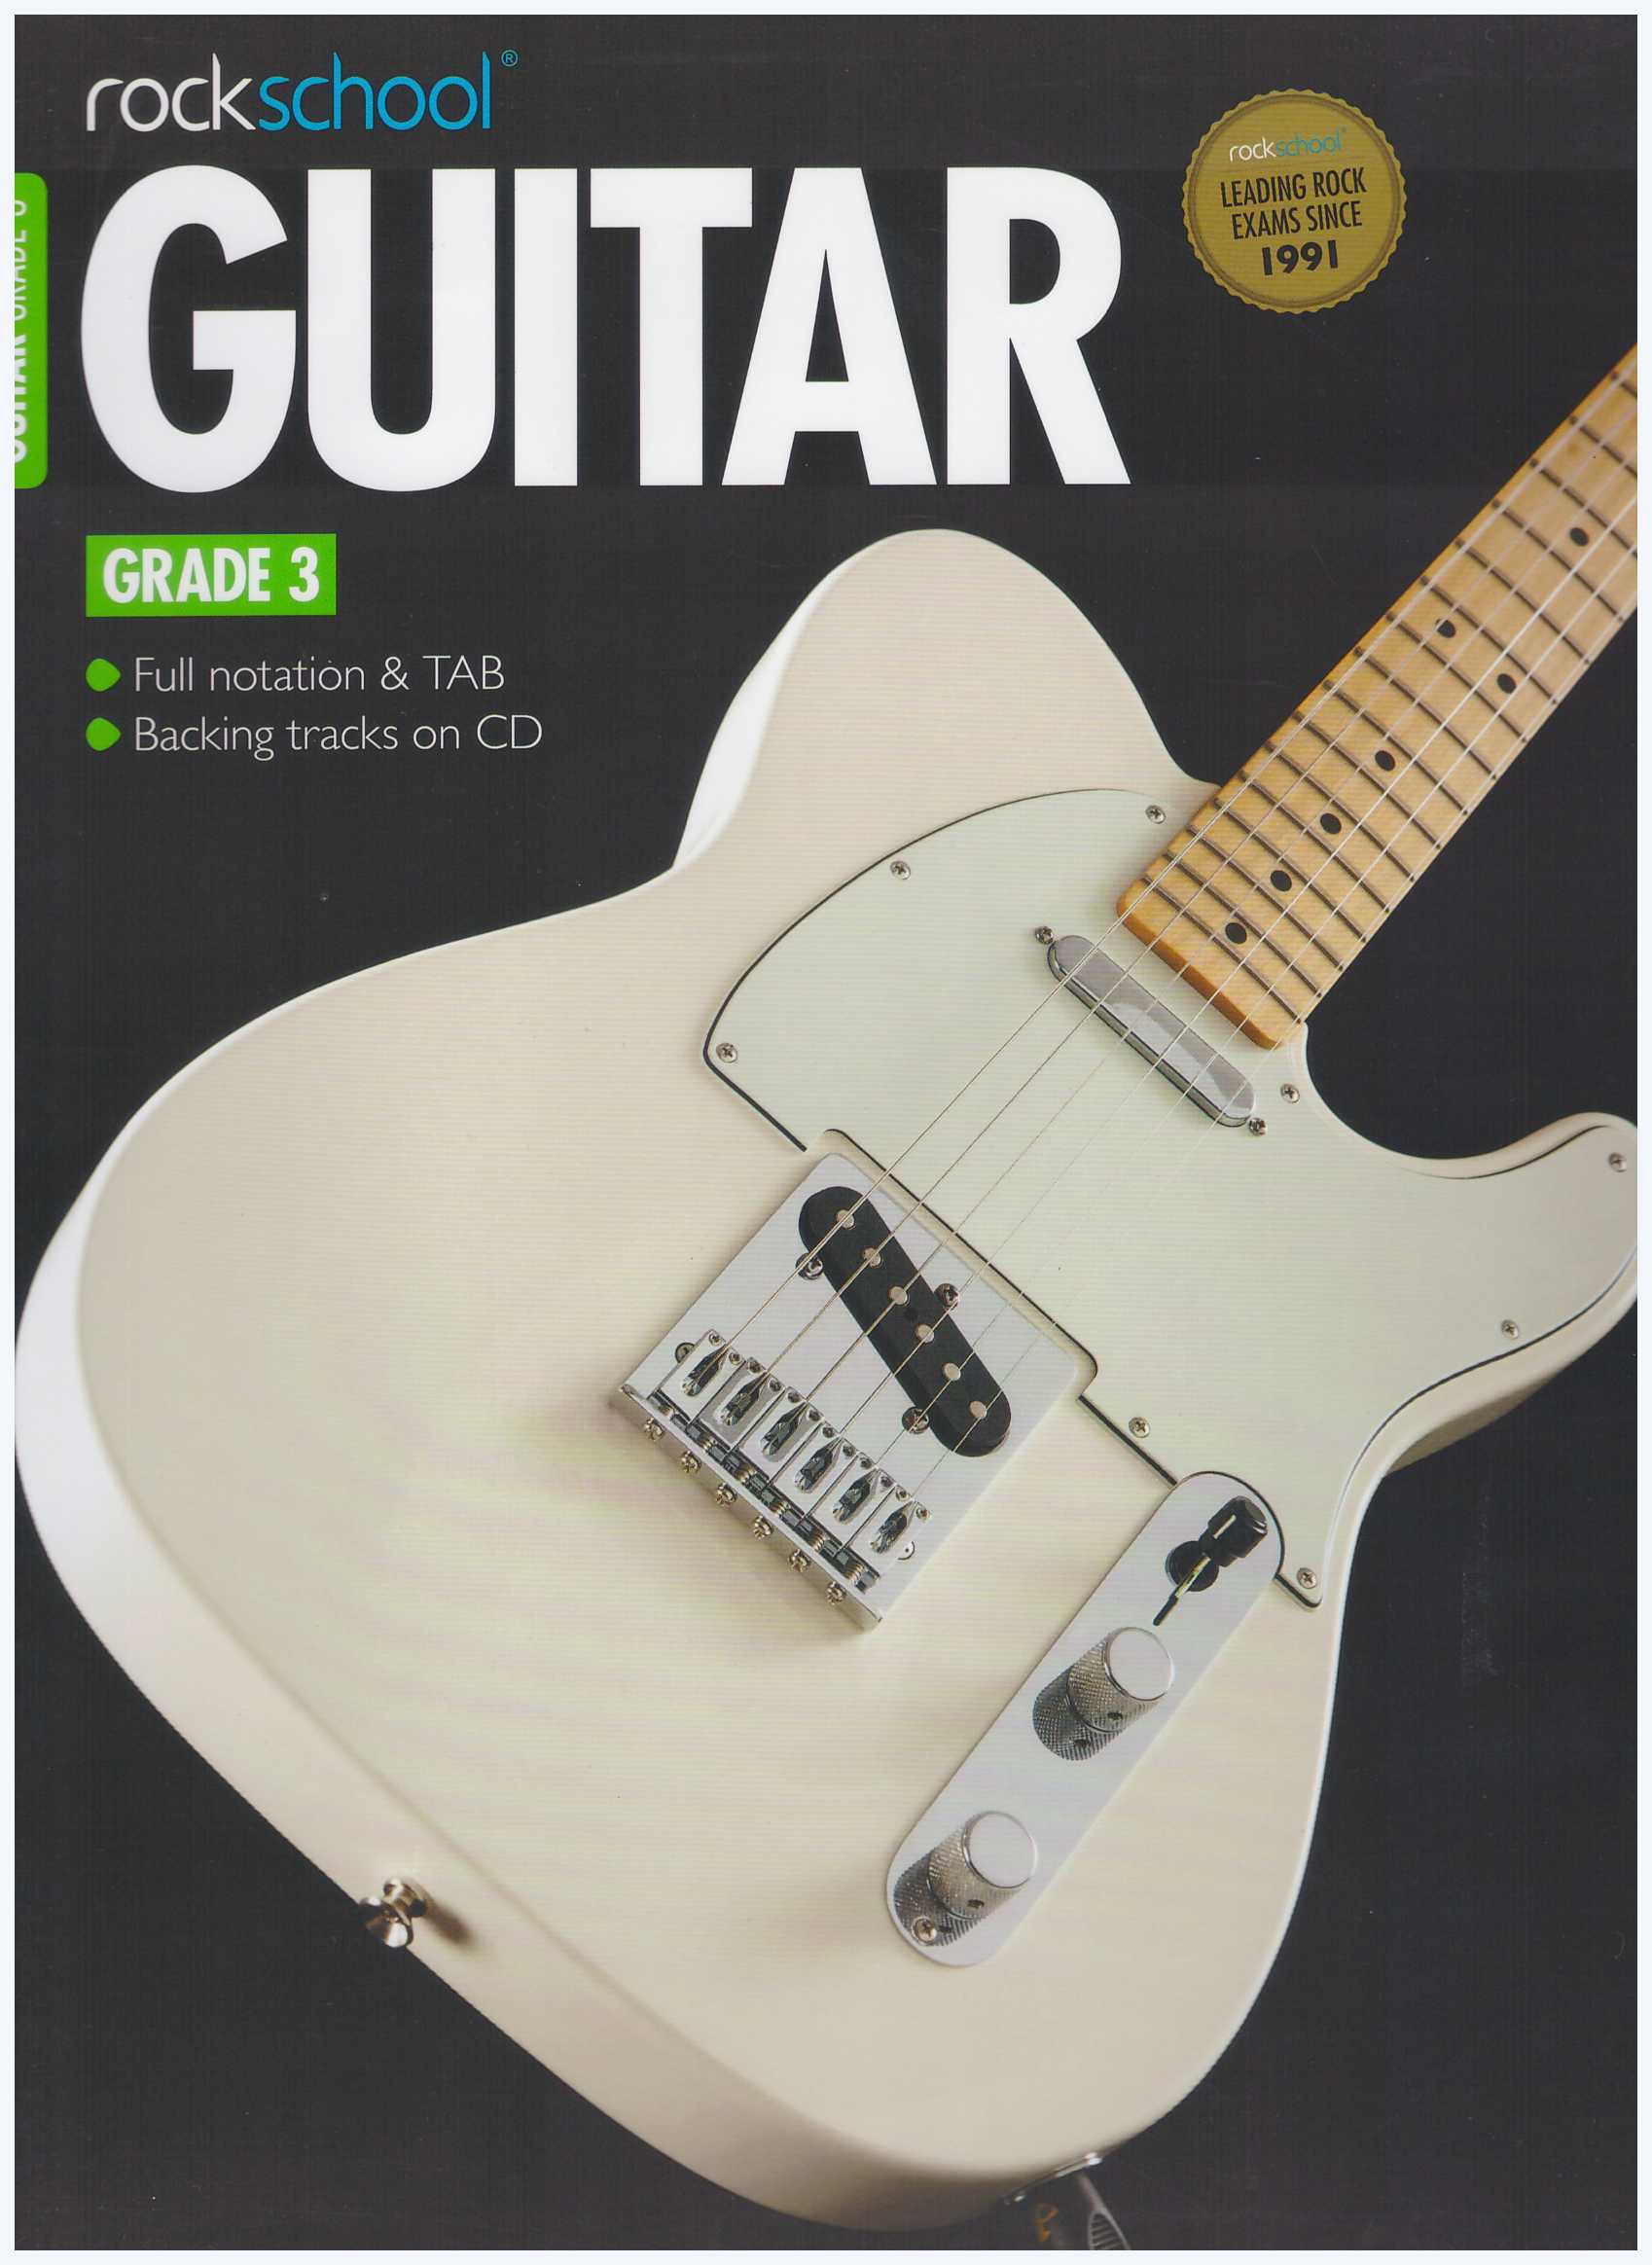 Rock School Guitar Grade 3 2012-2018 / Exam Book / Education Book / Material Book / Guitar Book / Gitar Book